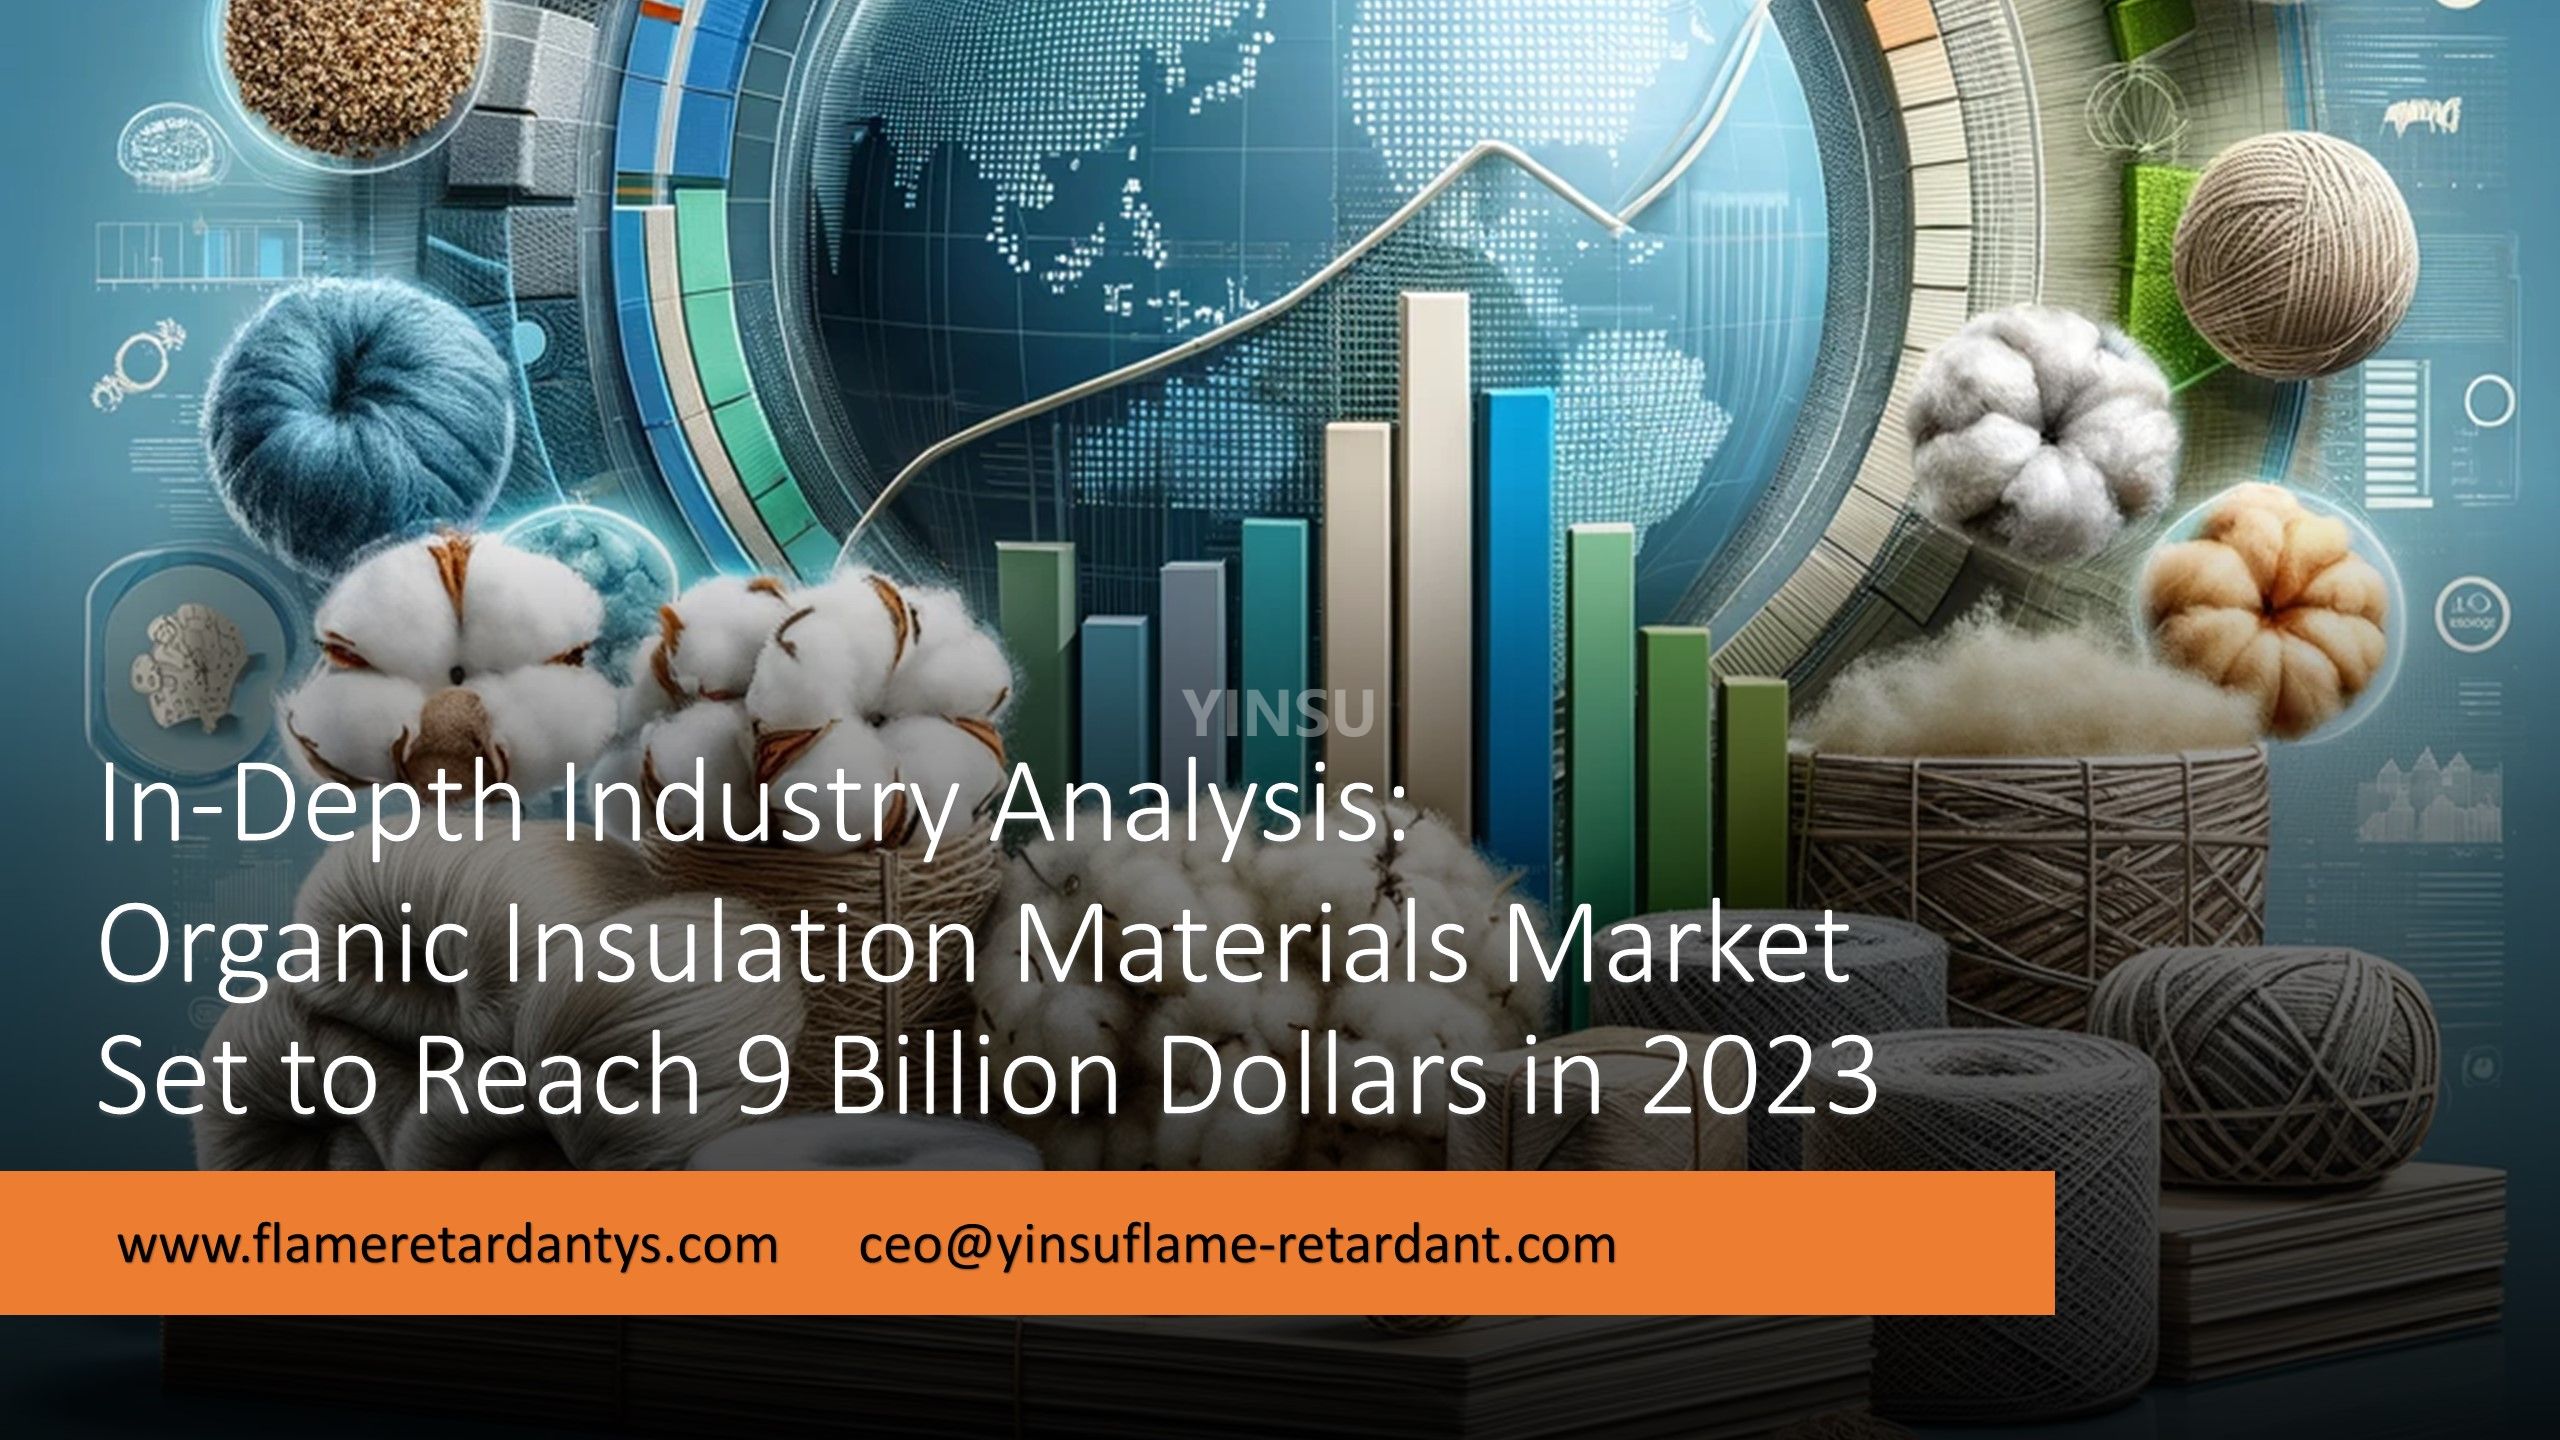 In-Depth Industry Analysis: Organic Insulation Materials Market Set to Reach 9 Billion Dollars in 2023